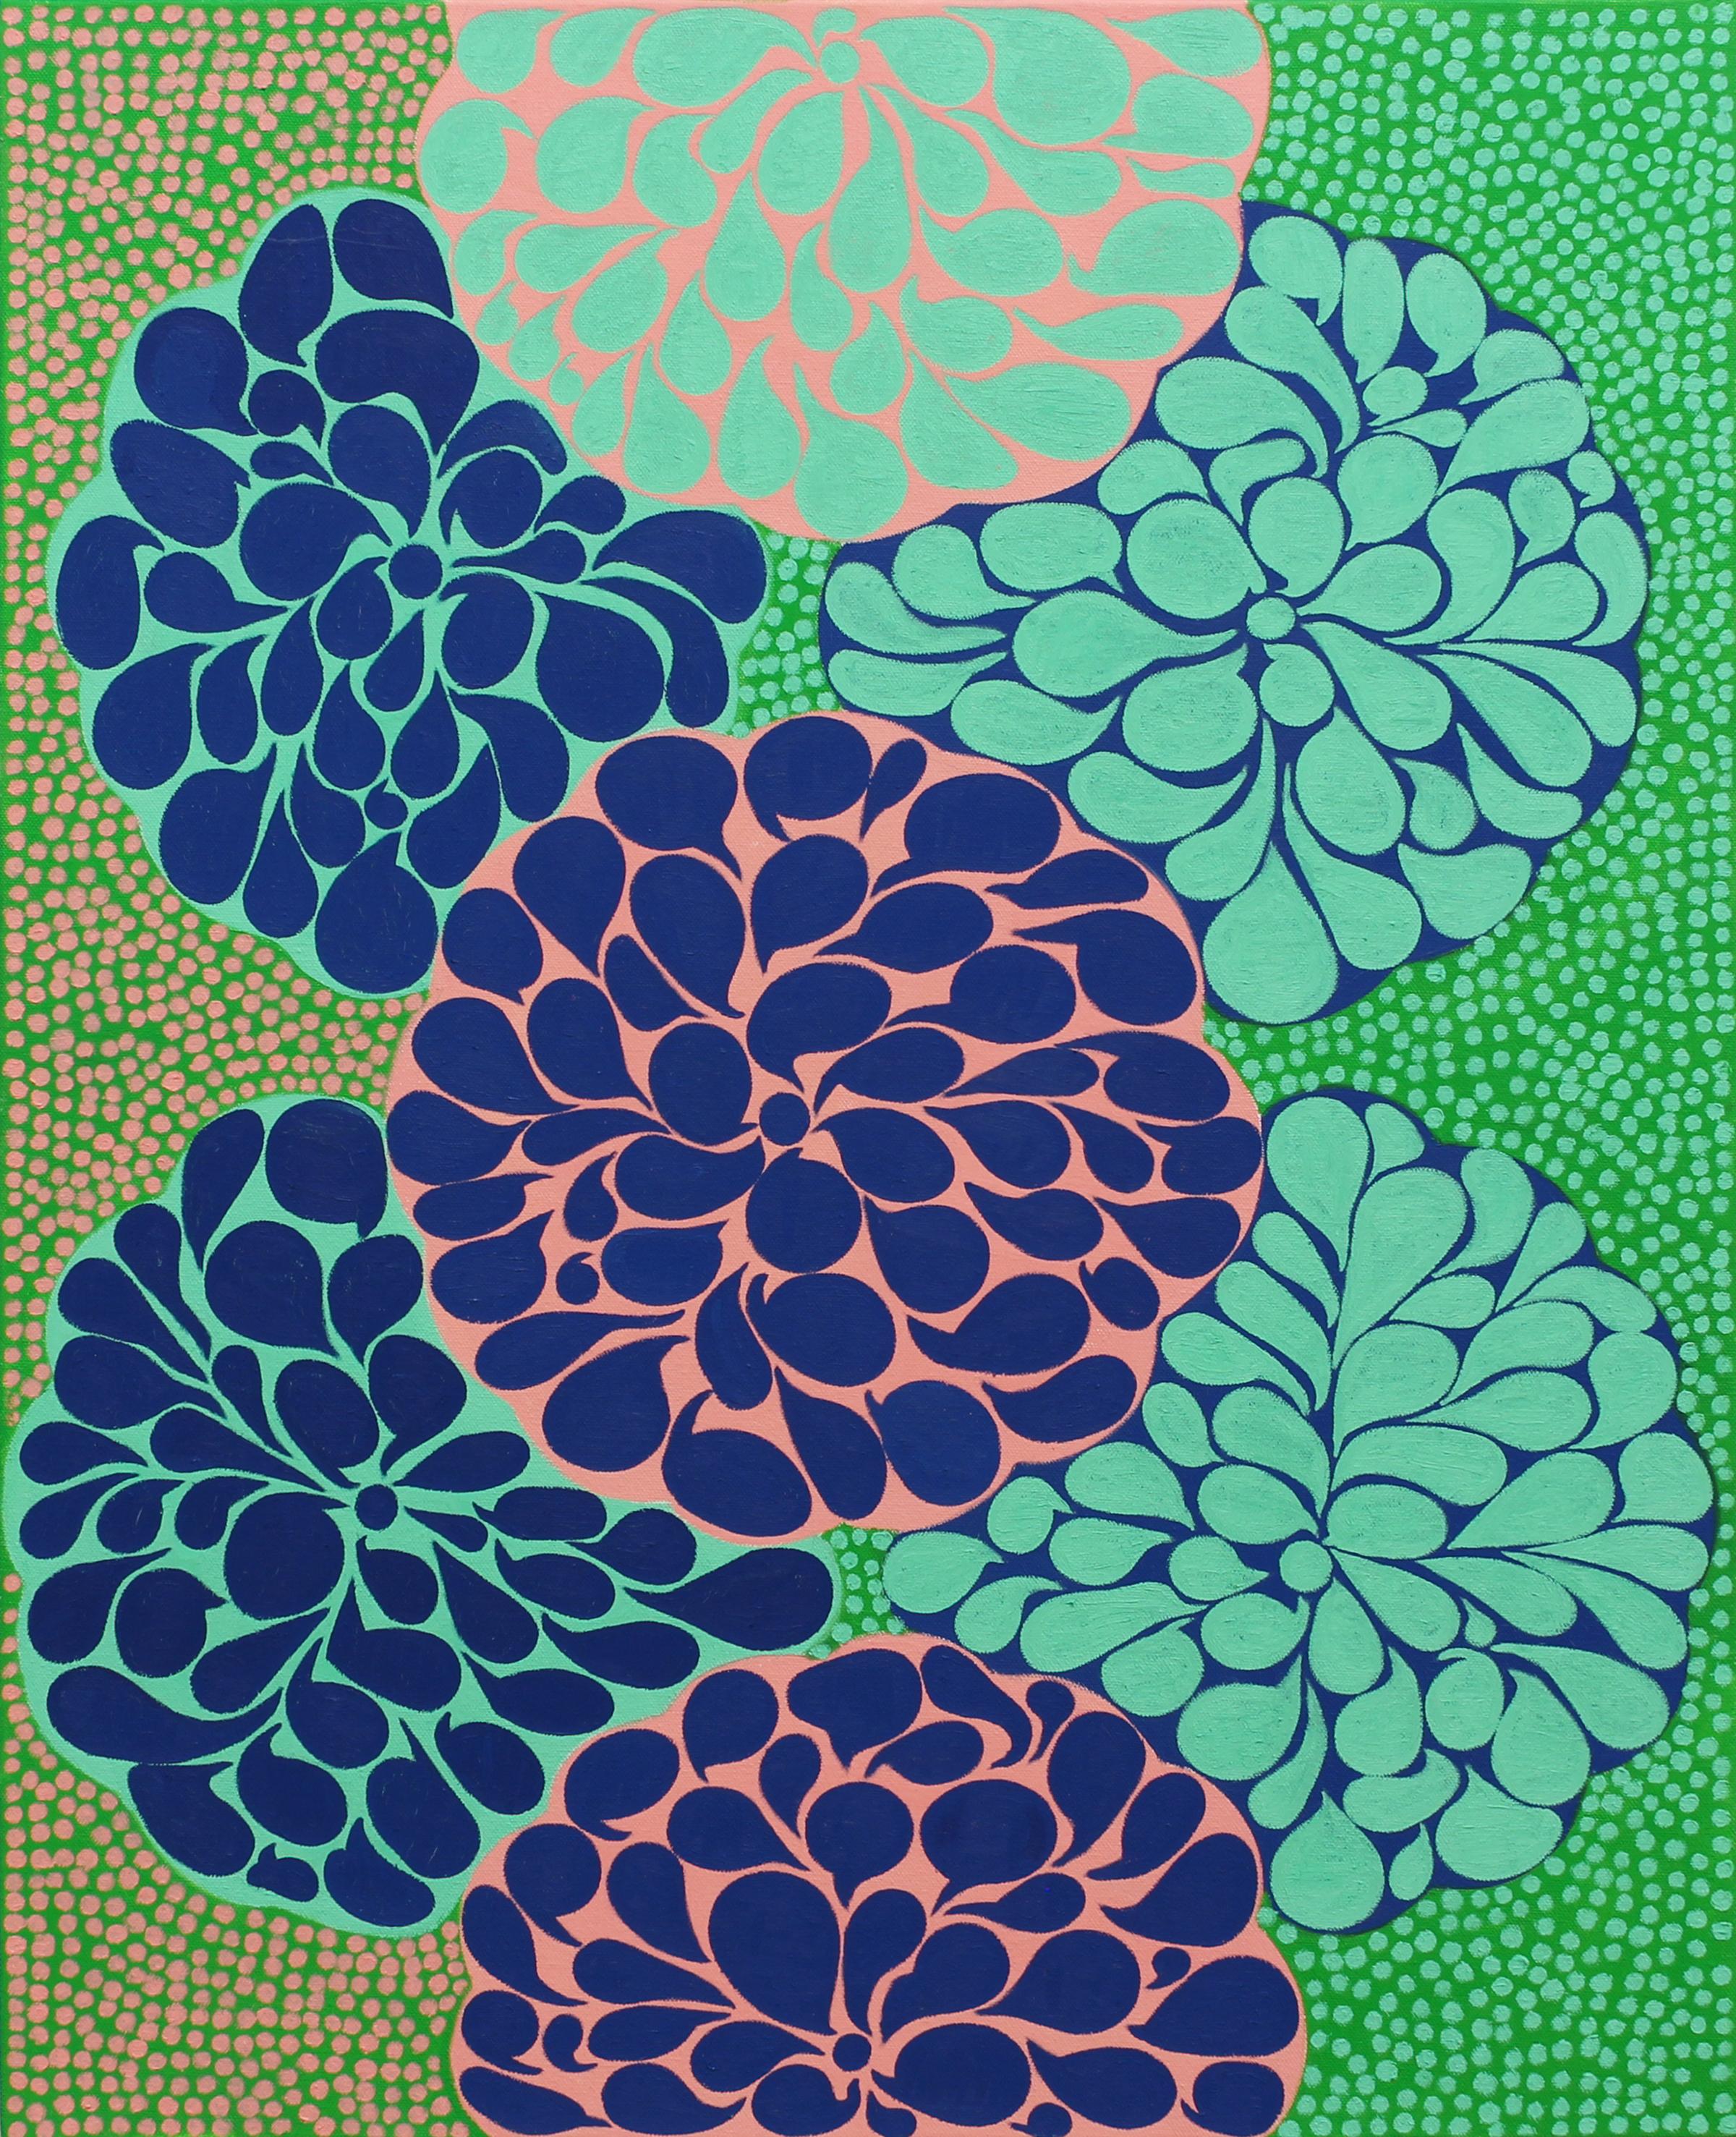 Carol John Abstract Painting - 'Flower Burst No. 2' - abstract - pattern - pop - botanical - bright colors